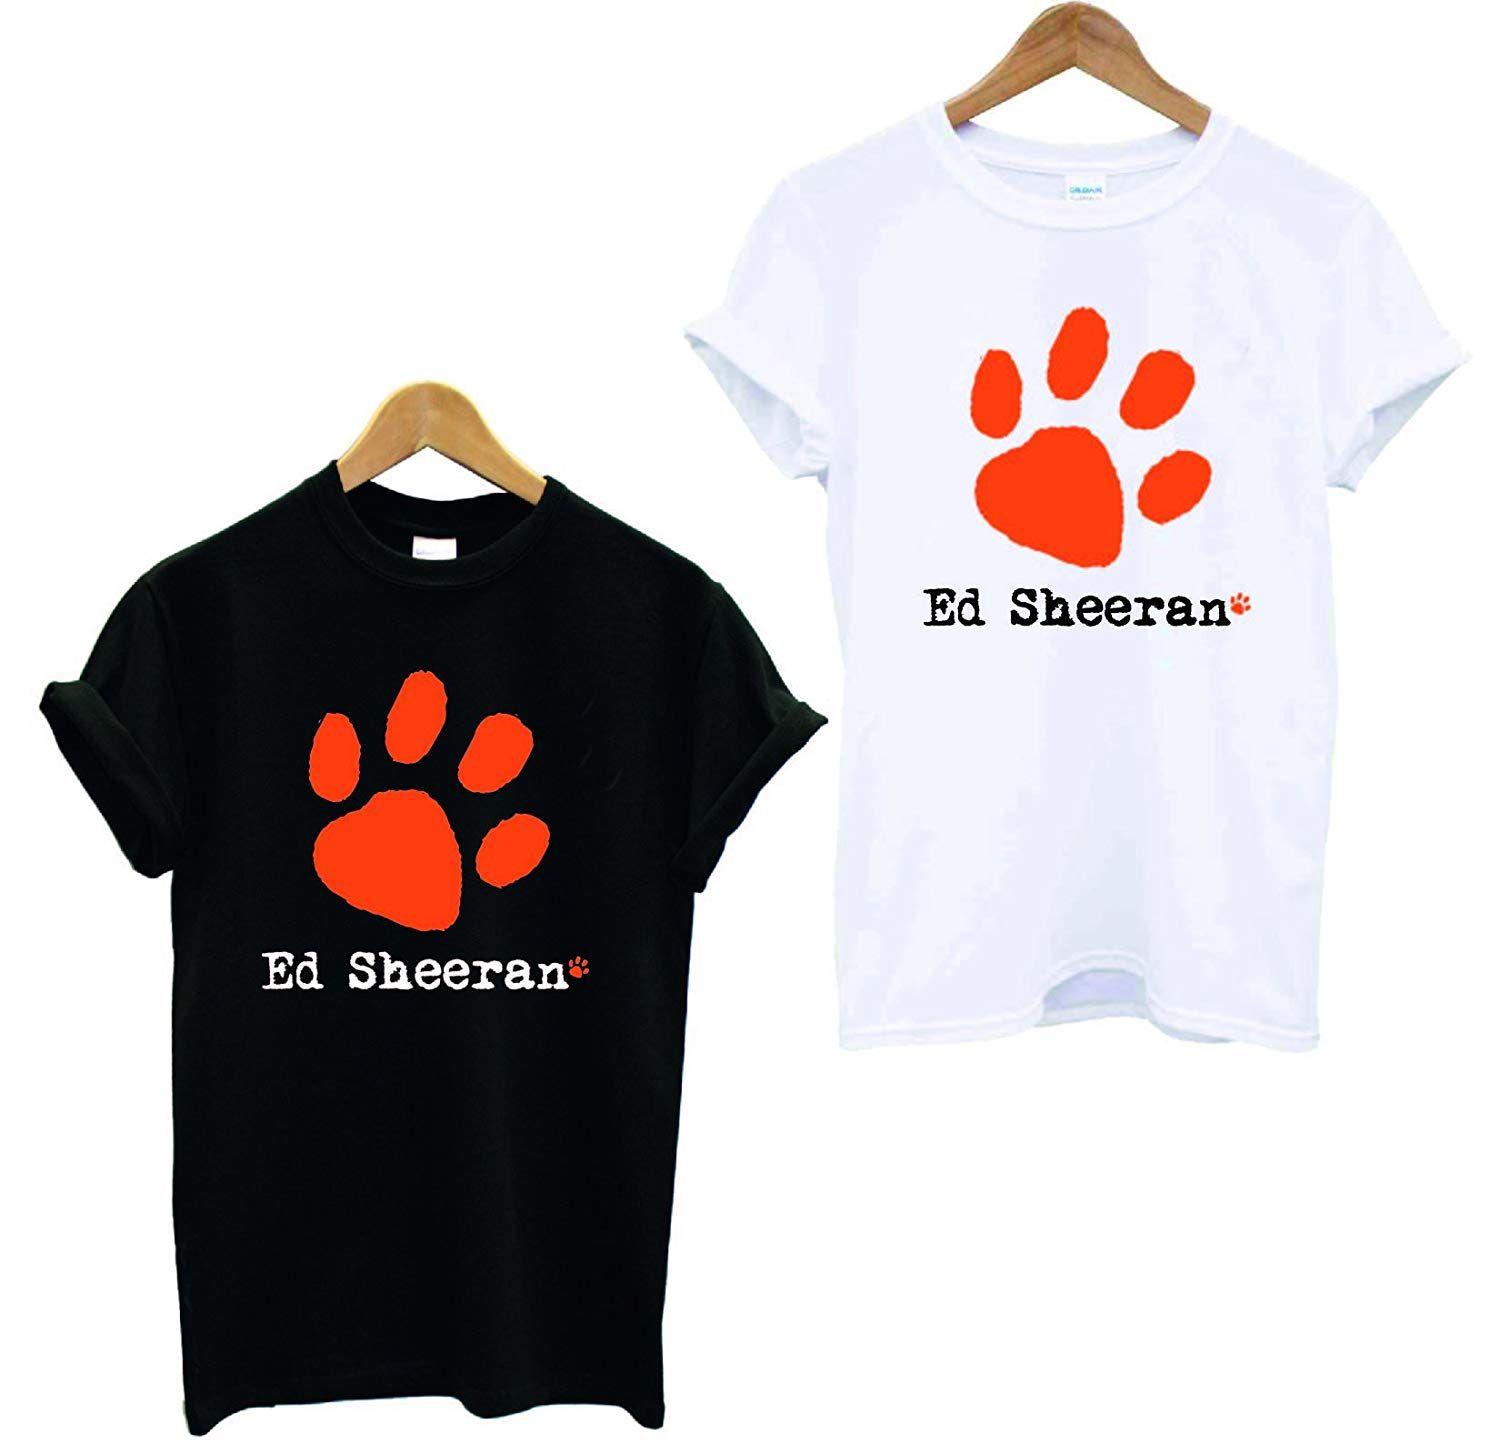 Orange Clothing Logo - ED SHEERAN CASUAL FITTED T SHIRT (ORANGE PAW PRINT) (XX LARGE, WHITE